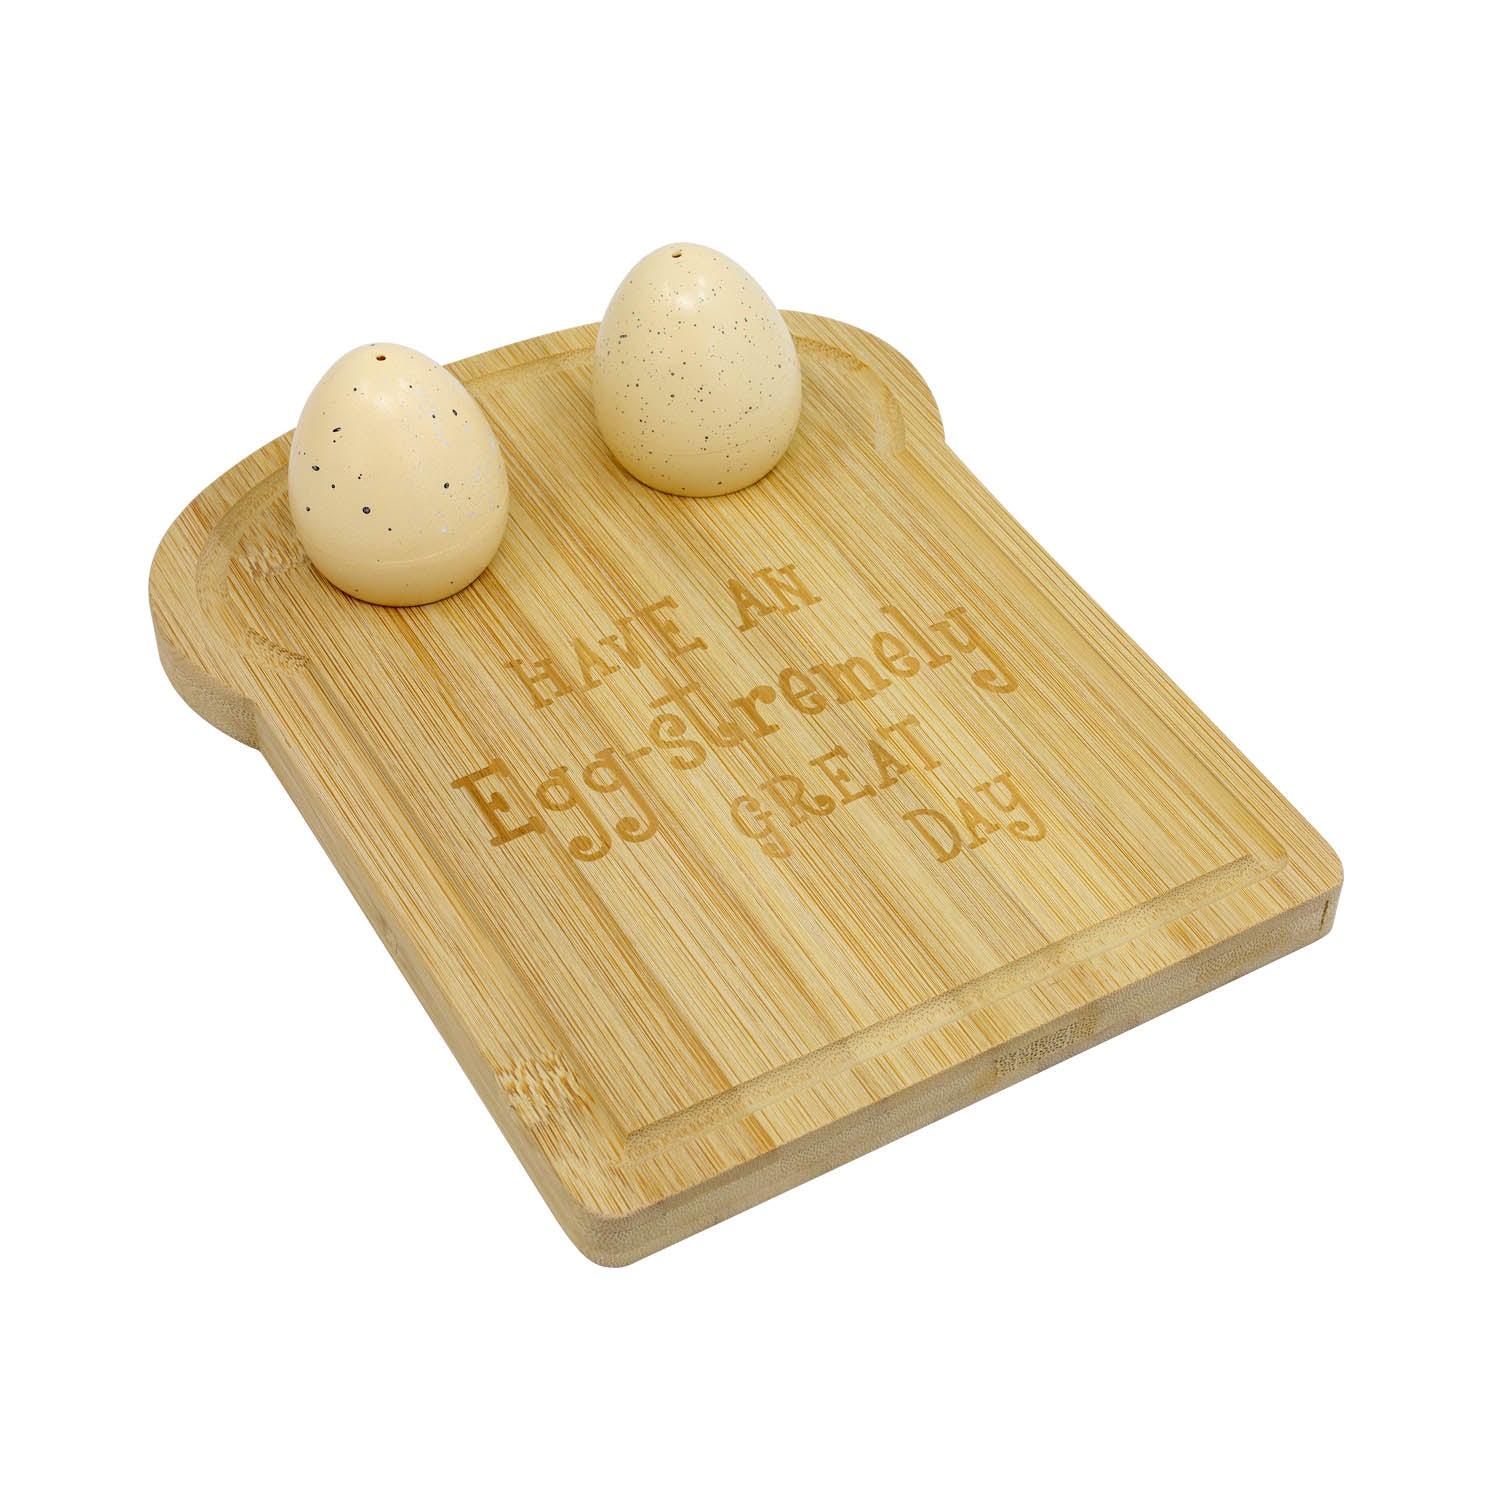 Wooden Breakfast Board Toast Shape with Egg Holders